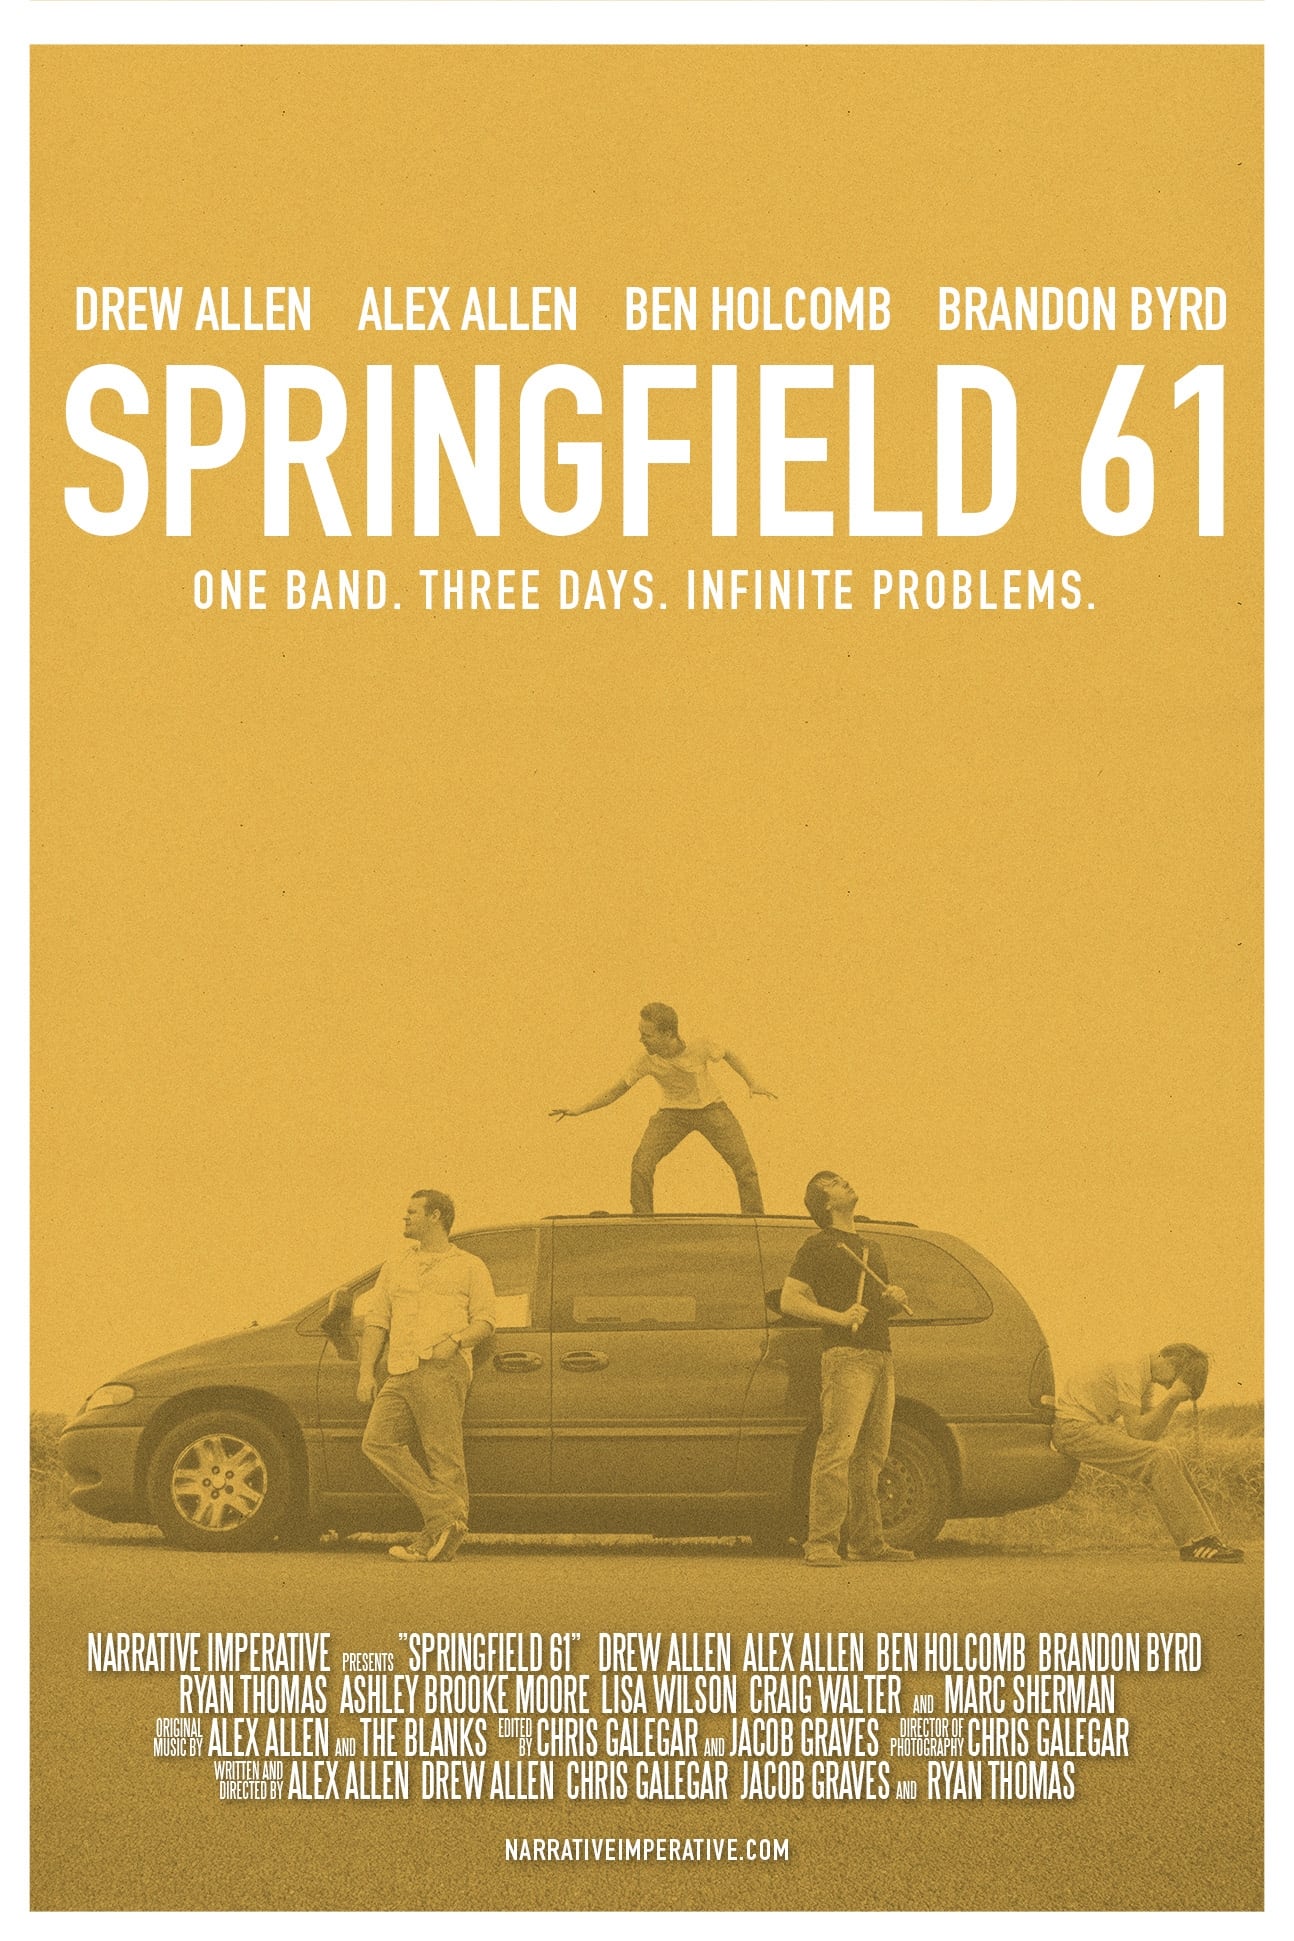 Springfield 61